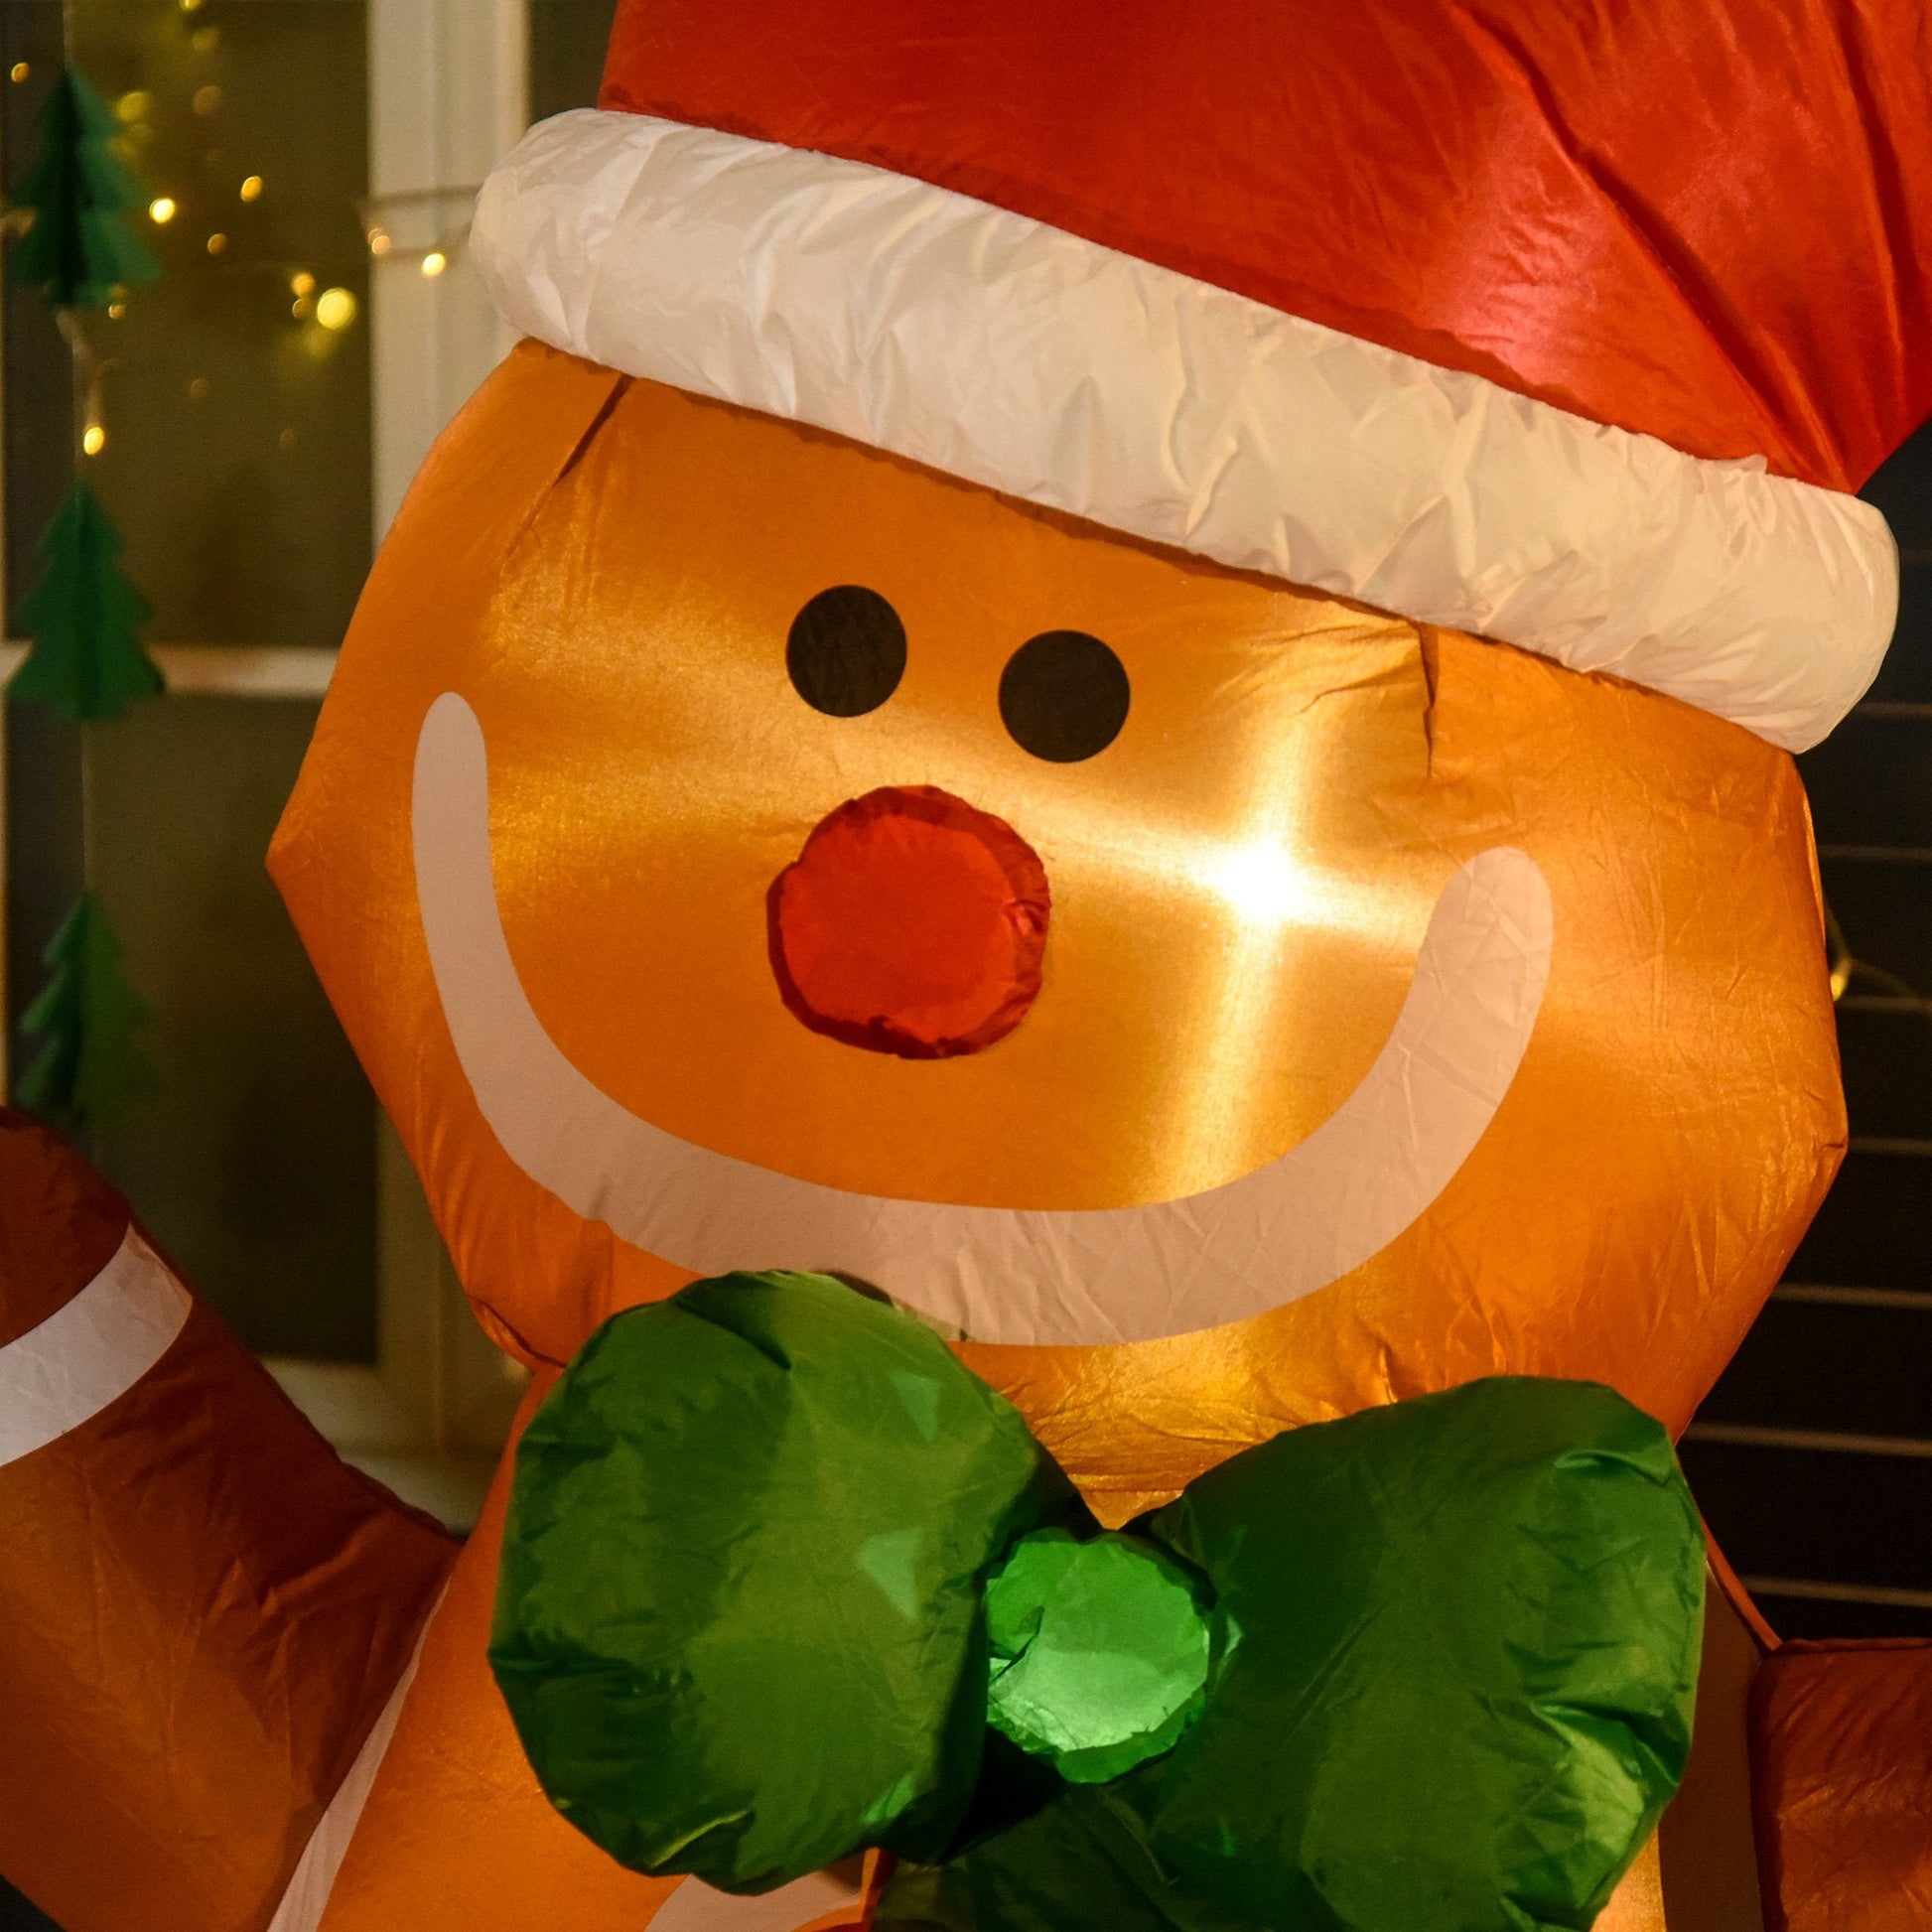 HOMCOM 6ft Christmas Inflatable LED Gingerbread Man with Santa Hat - maplin.co.uk